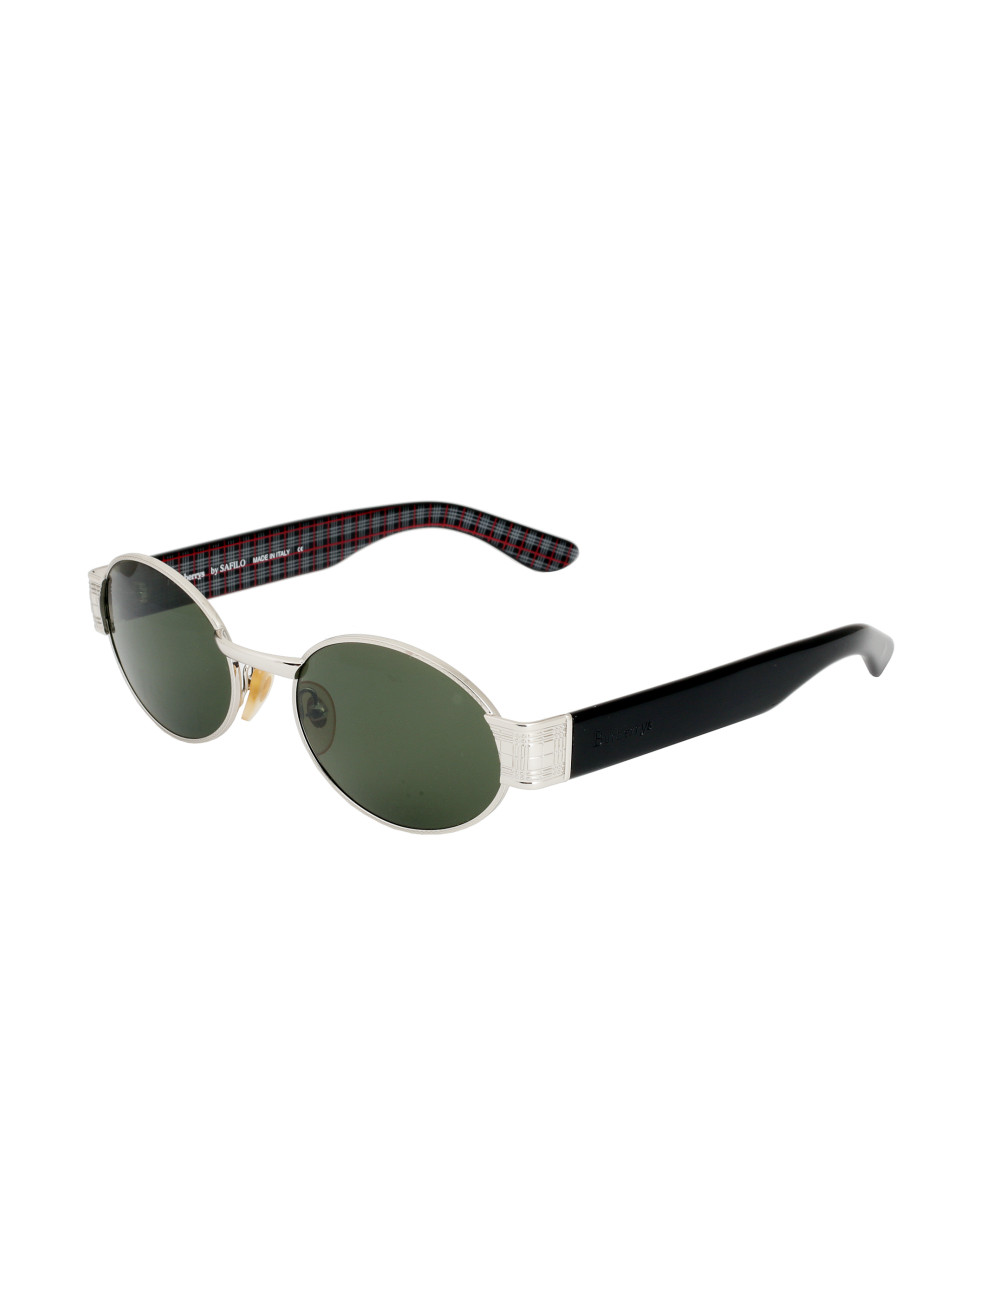 Burberry's 90's Silver Black Oval Sunglasses